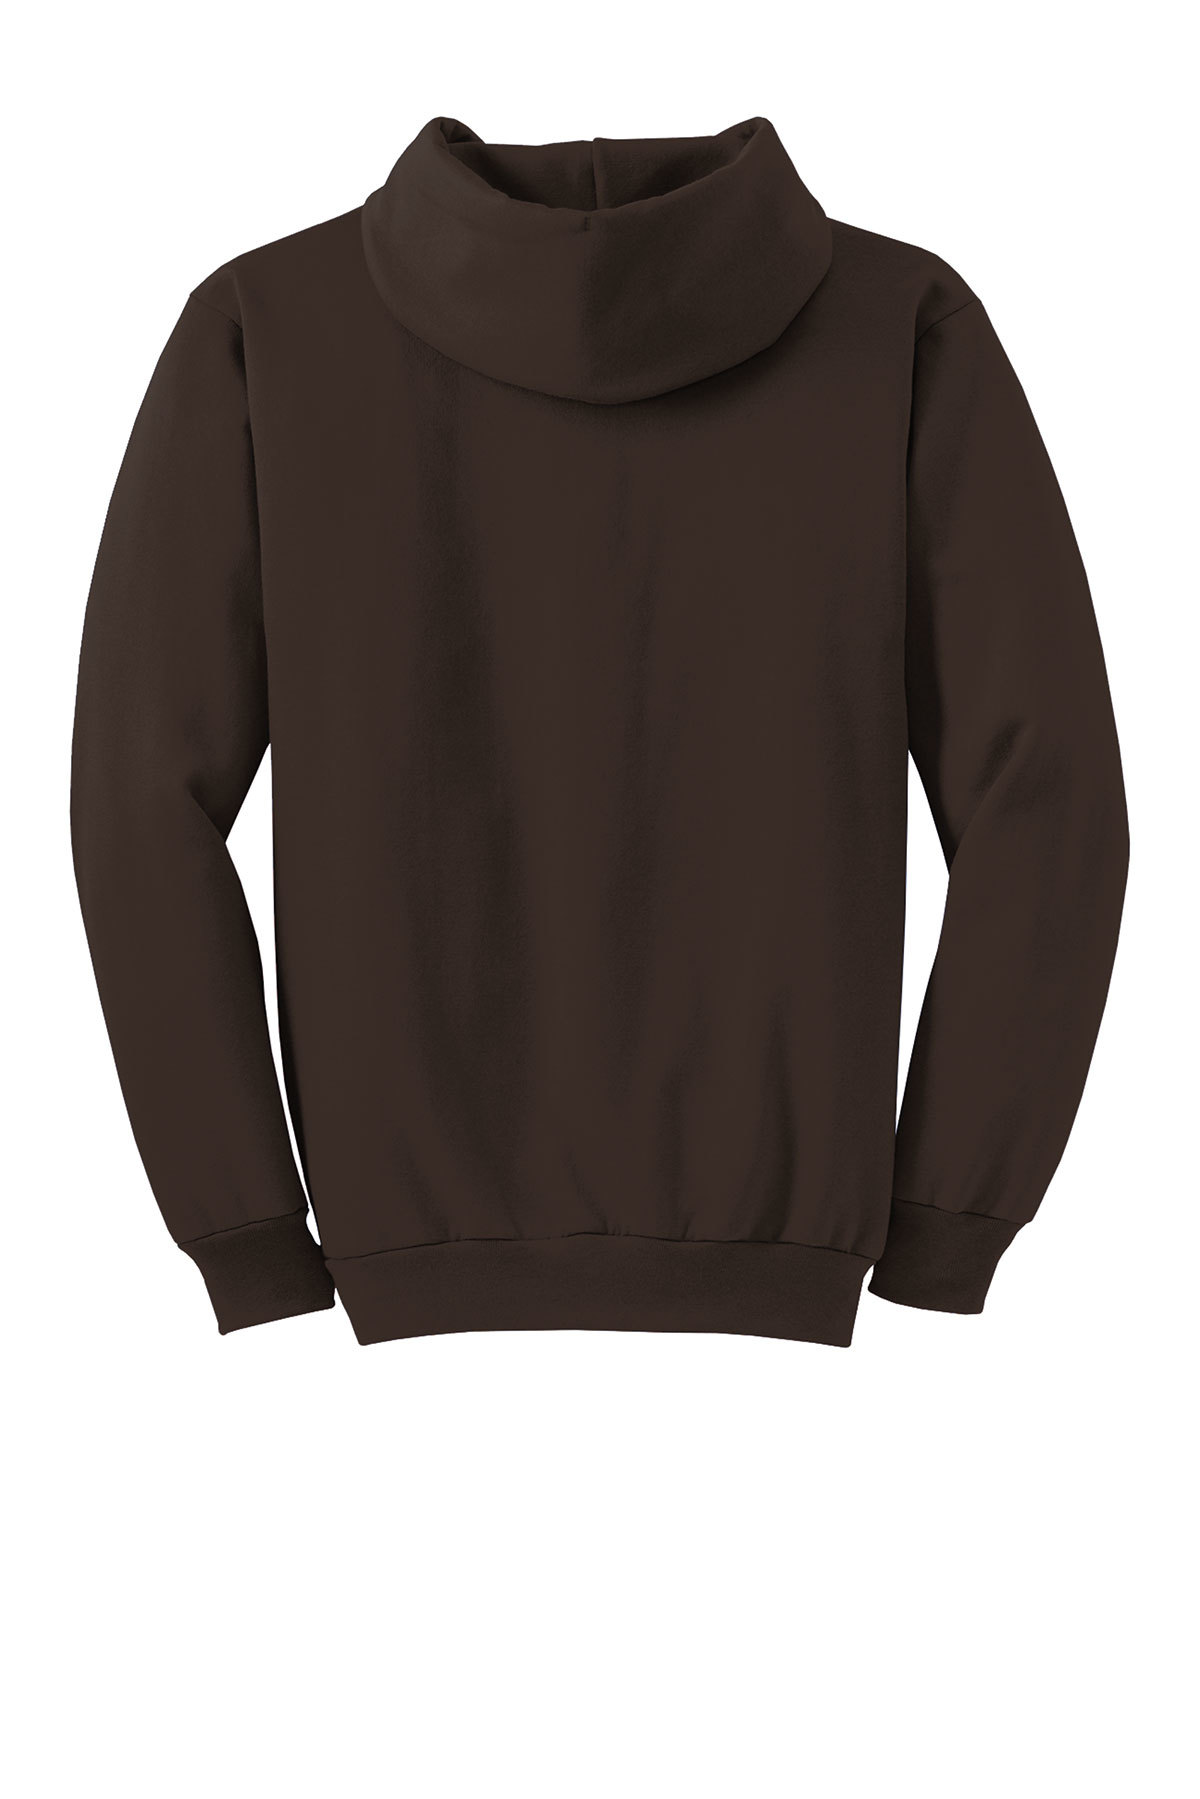 Port & Company PC90HT Tall Essential Fleece Pullover Hooded Sweatshirt - Dark Chocolate Brown - 4XLT